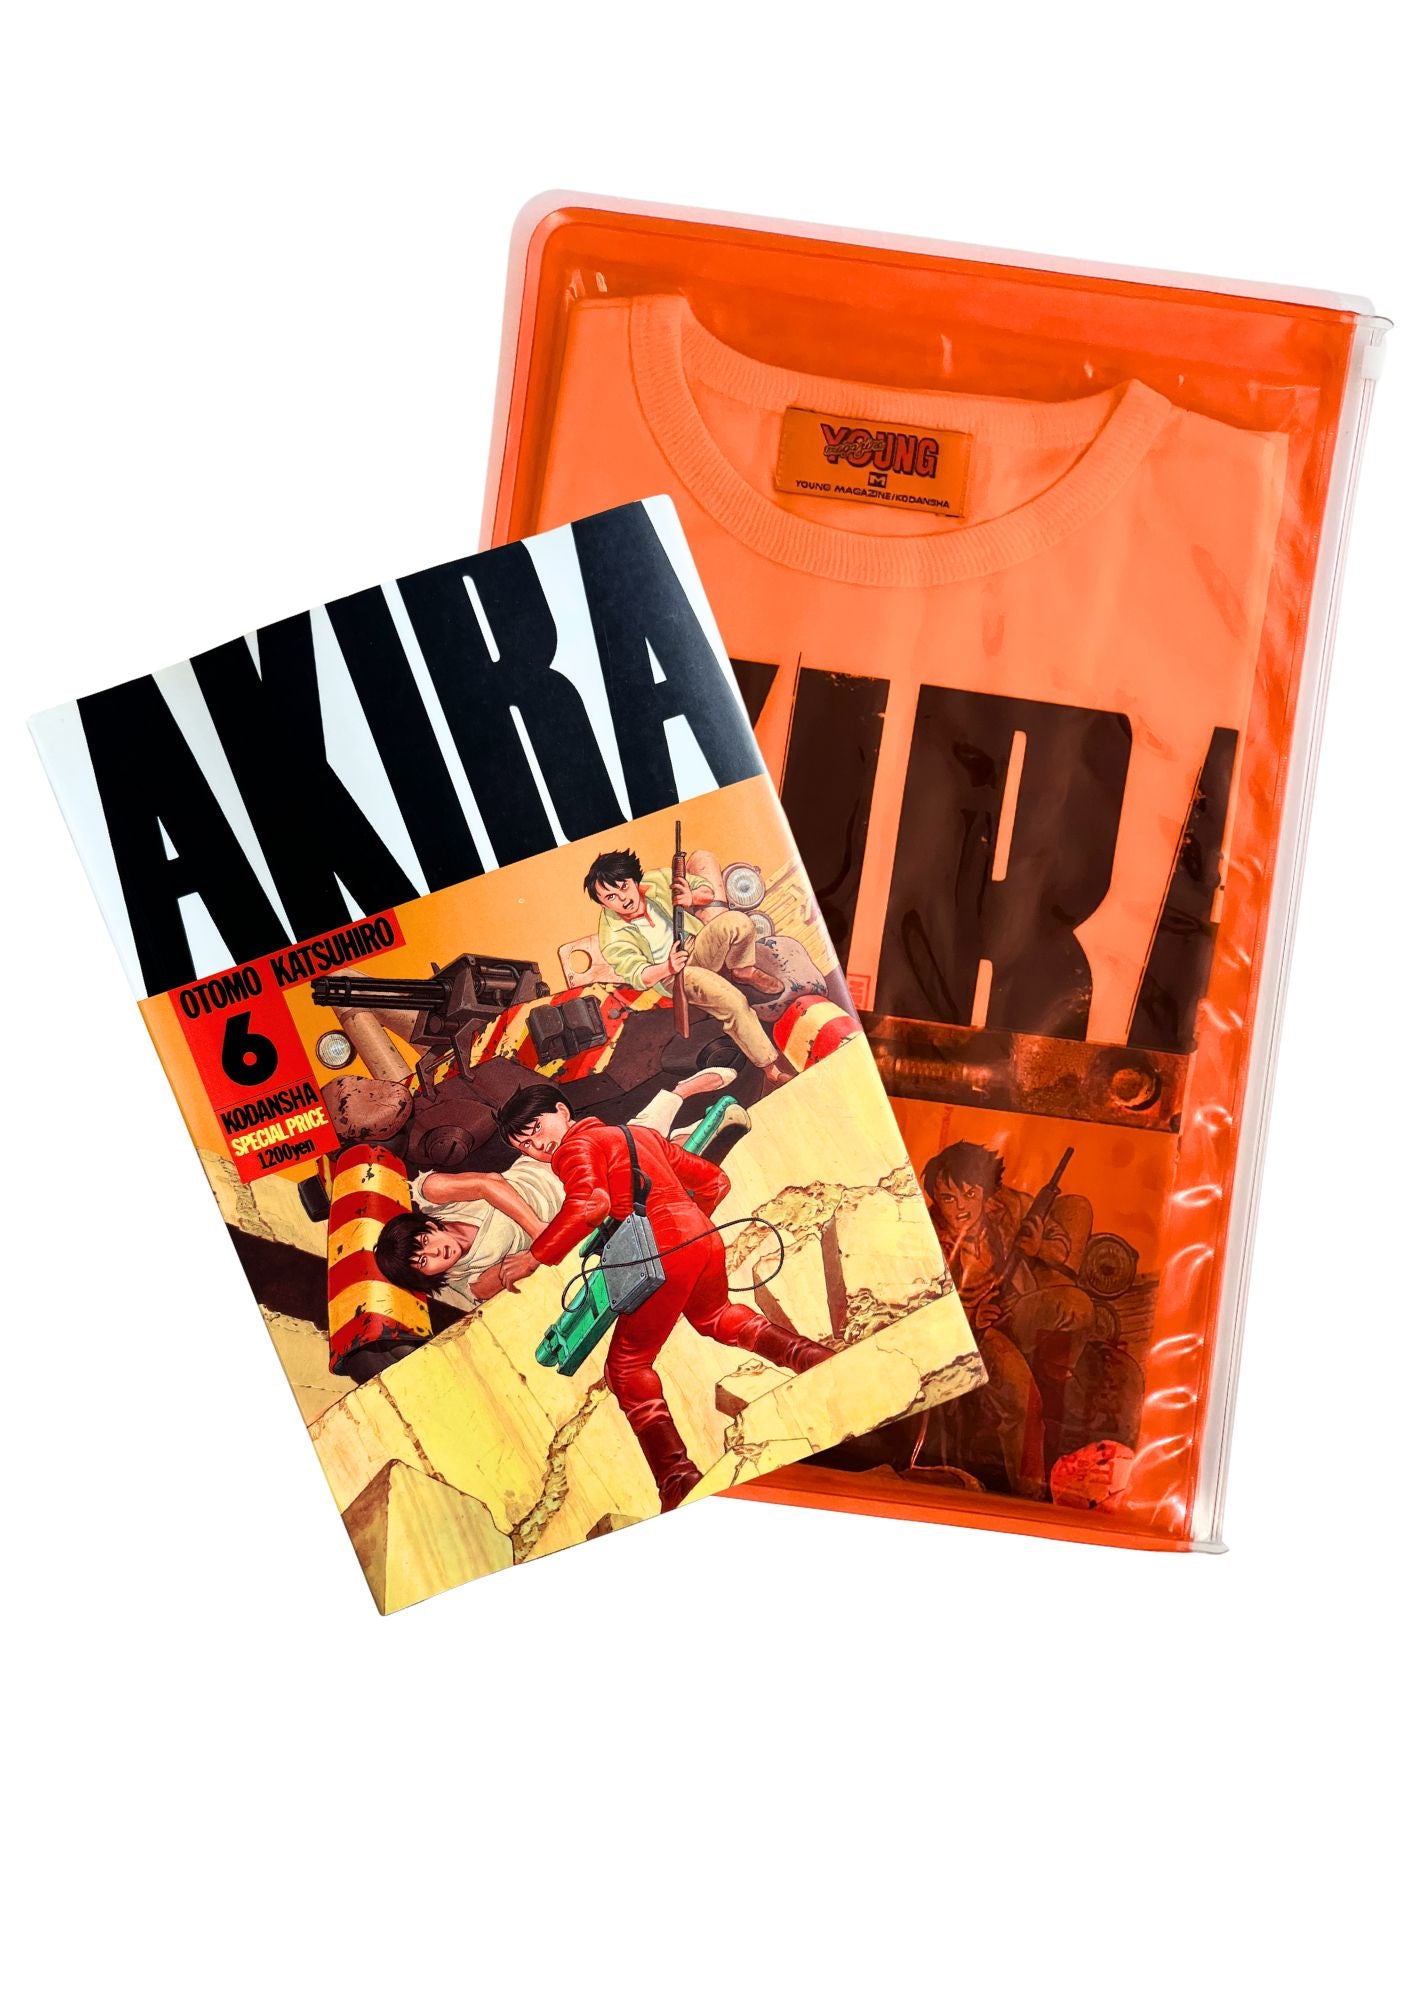 1999 Vintage AKIRA Official Young Magazine Vol.6 Manga Cover T-shirt / 1993 AKIRA Japanese Manga Vol. 6 1st Printing Issued Set